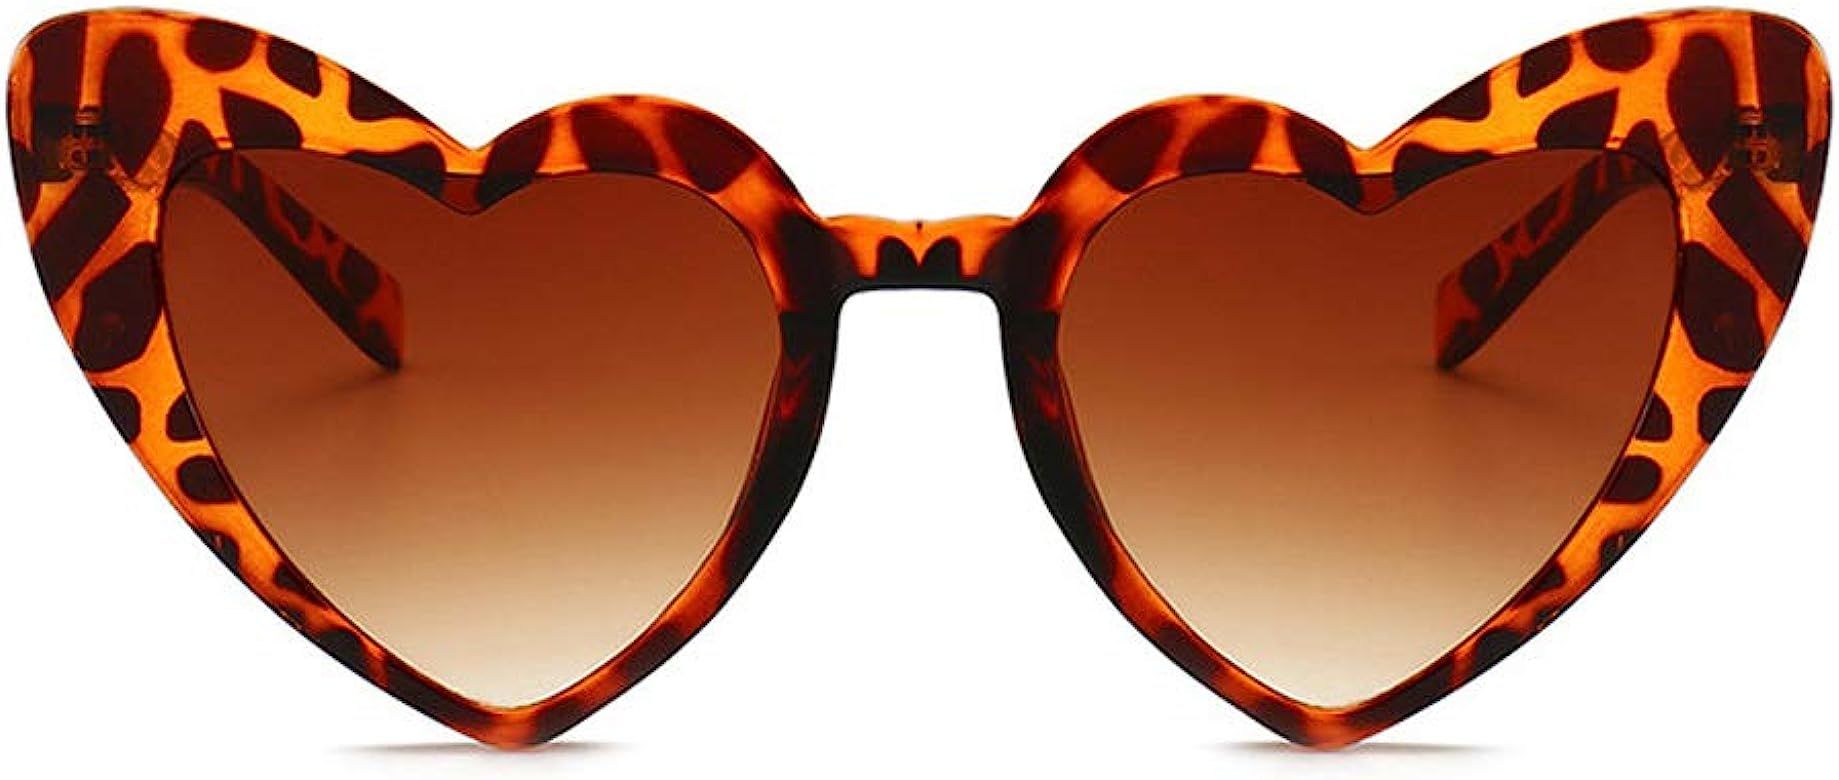 Zoint Clout Heart Sunglasses Goggles Vintage Cat Eye Mod Style Retro Kurt Cobain Glasses | Amazon (US)